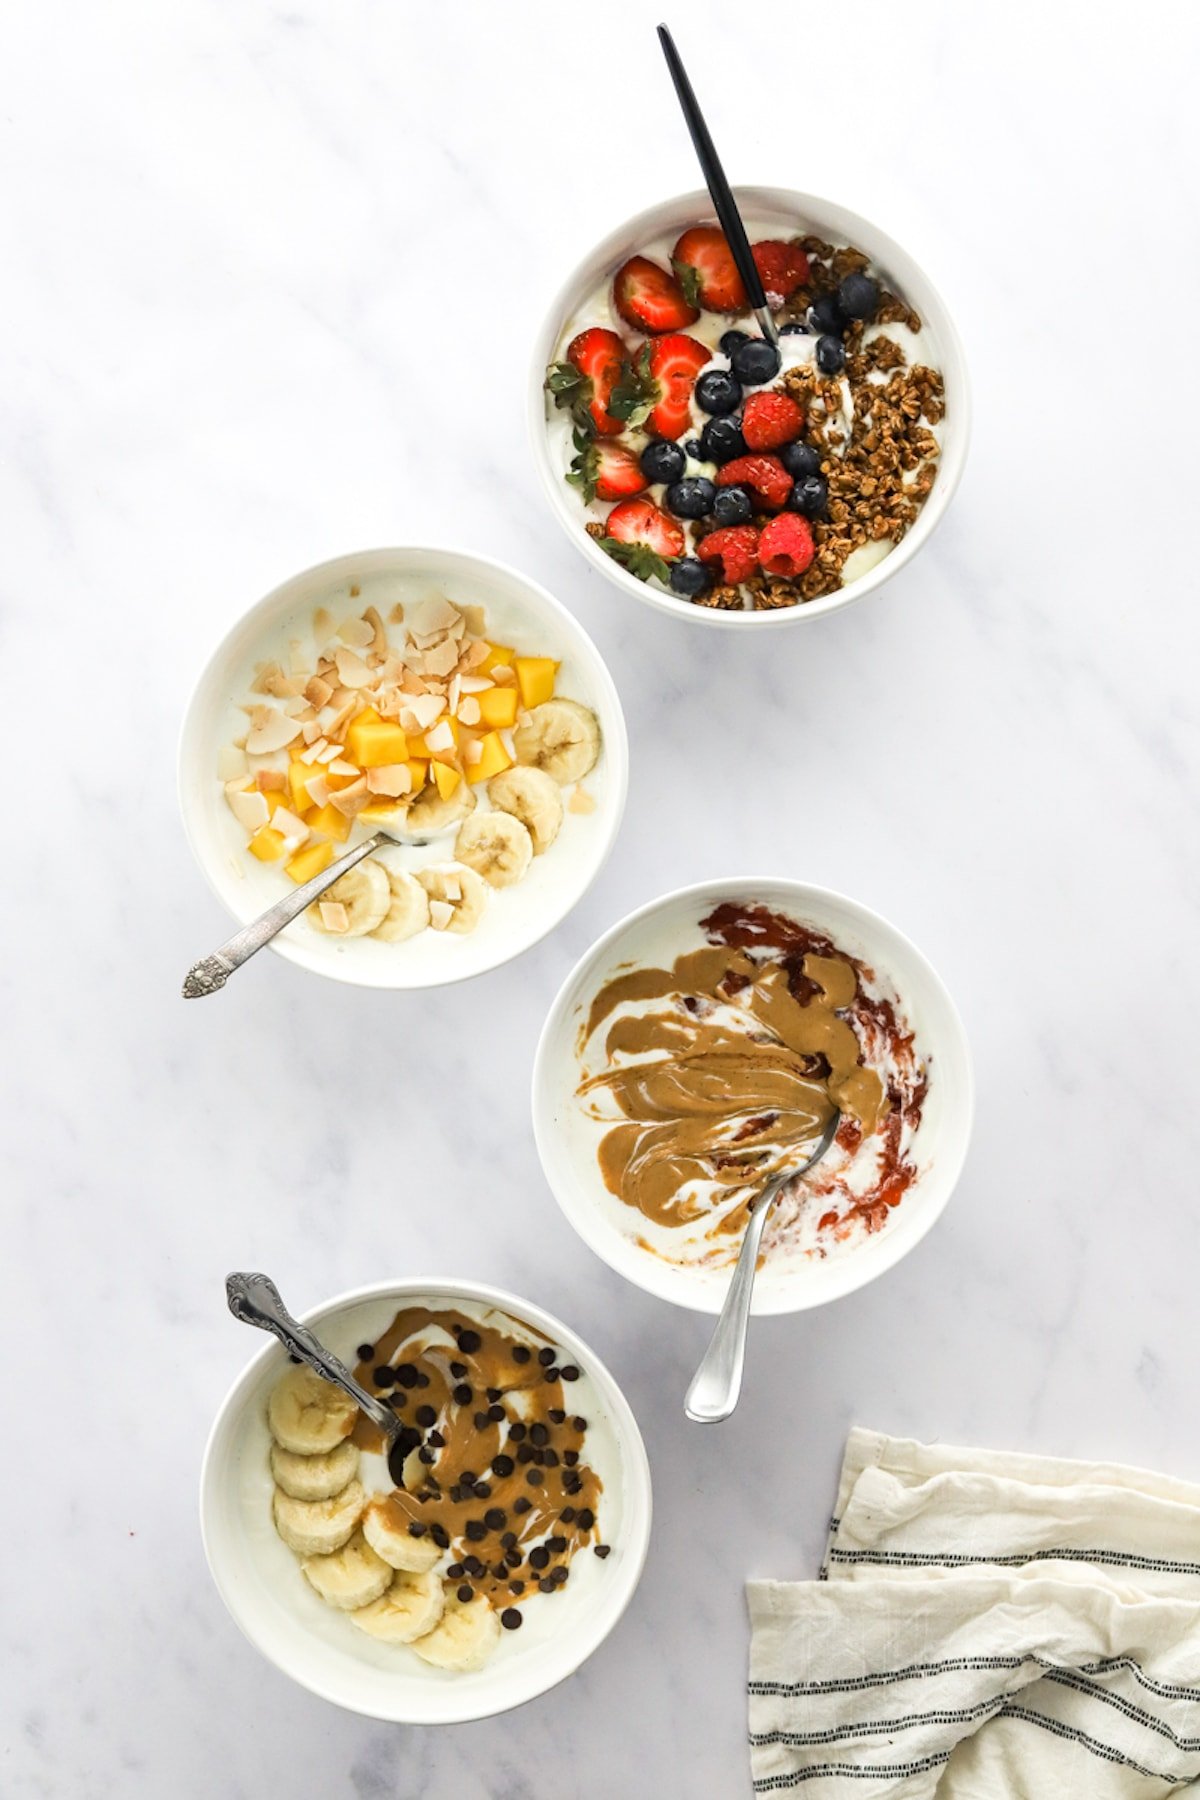 https://www.eatingbirdfood.com/wp-content/uploads/2022/06/yogurt-bowls-4-ways-hero.jpg